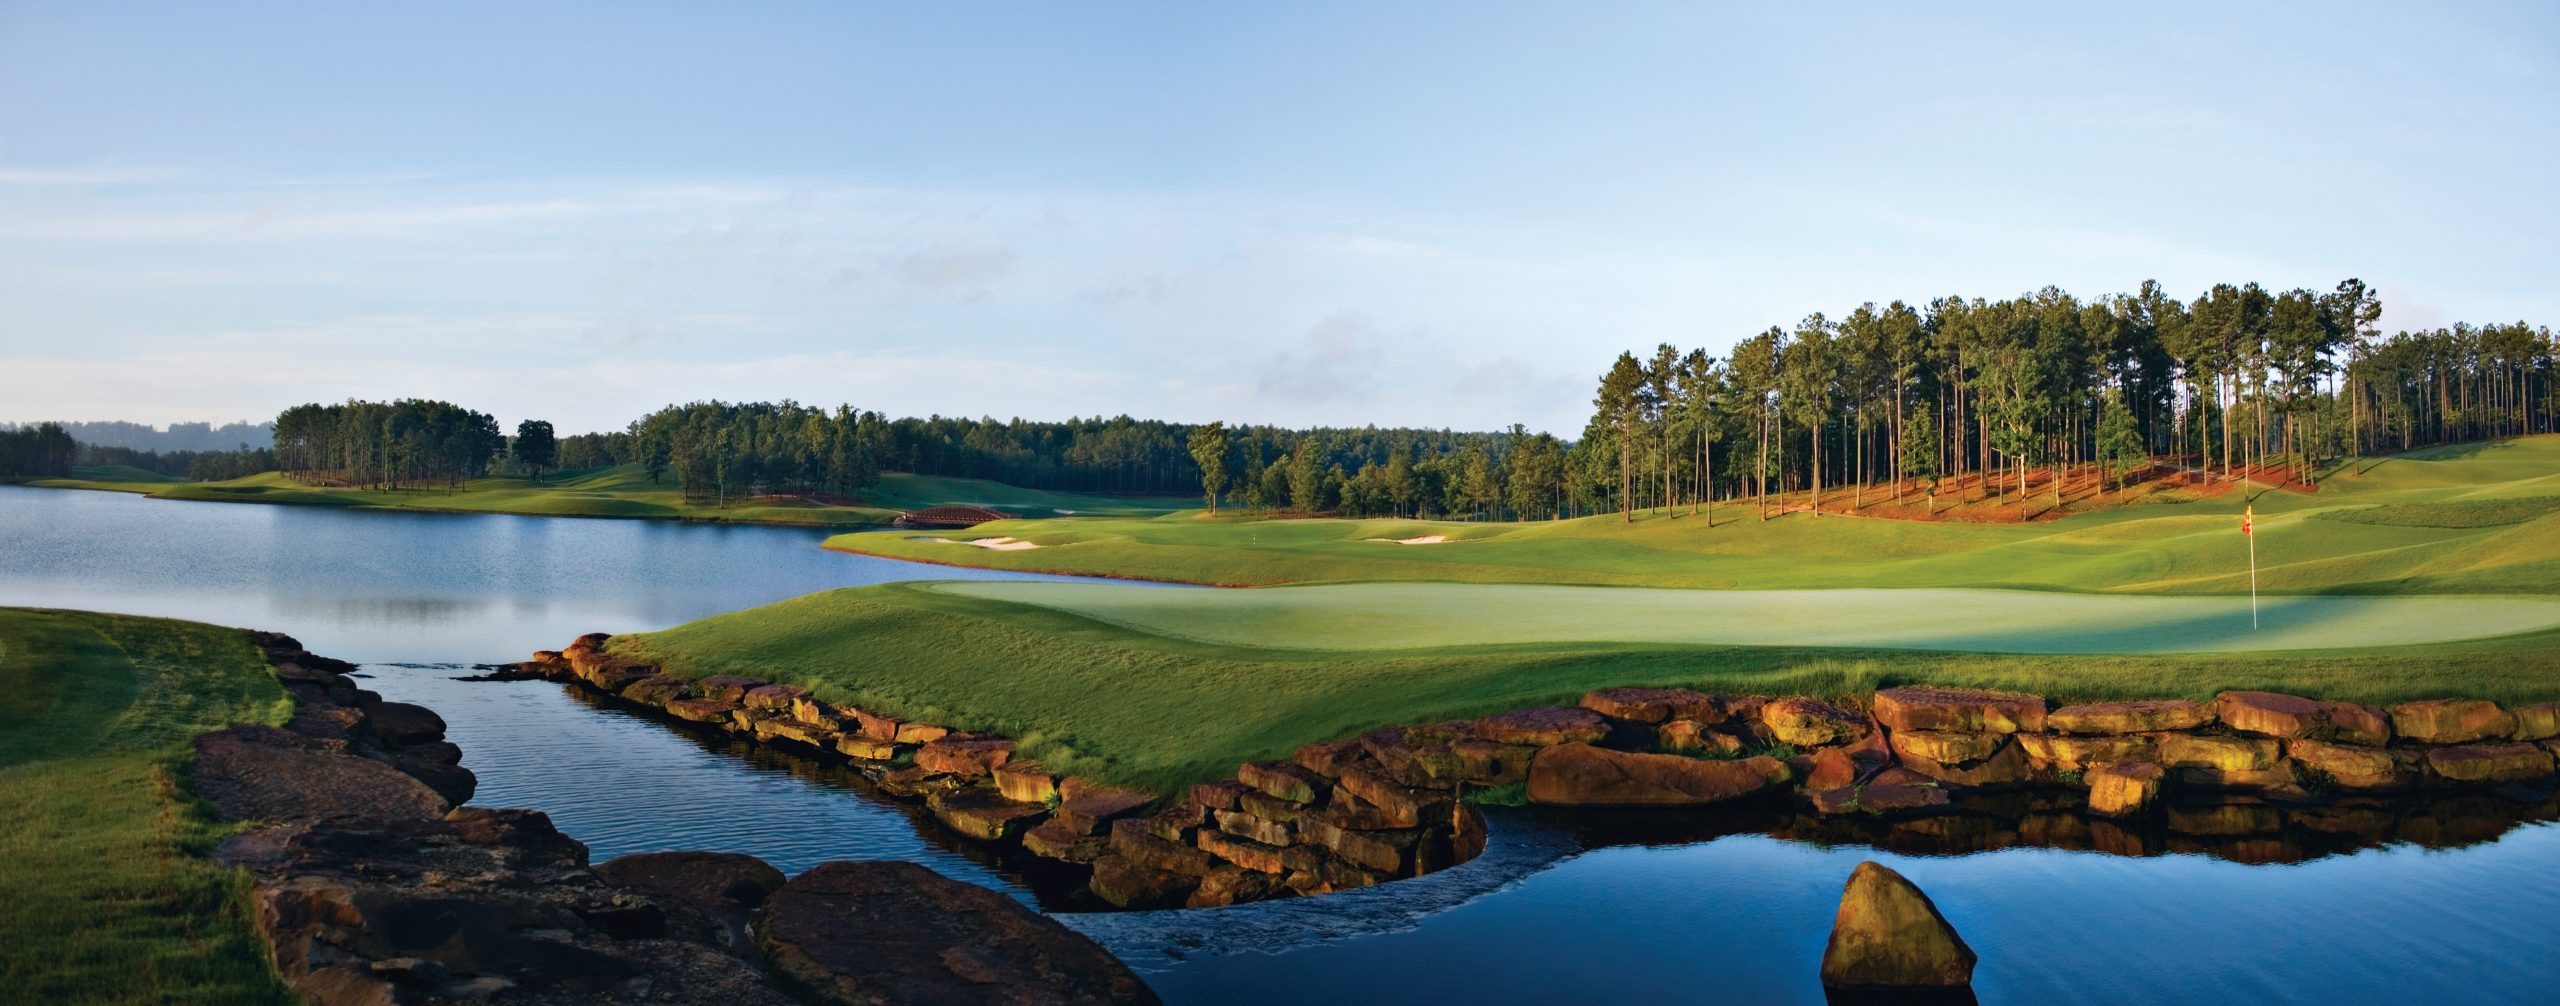 Public Golf Courses in the Birmingham Area - Greater Birmingham Convention & Visitors Bureau - Birmingham, AL